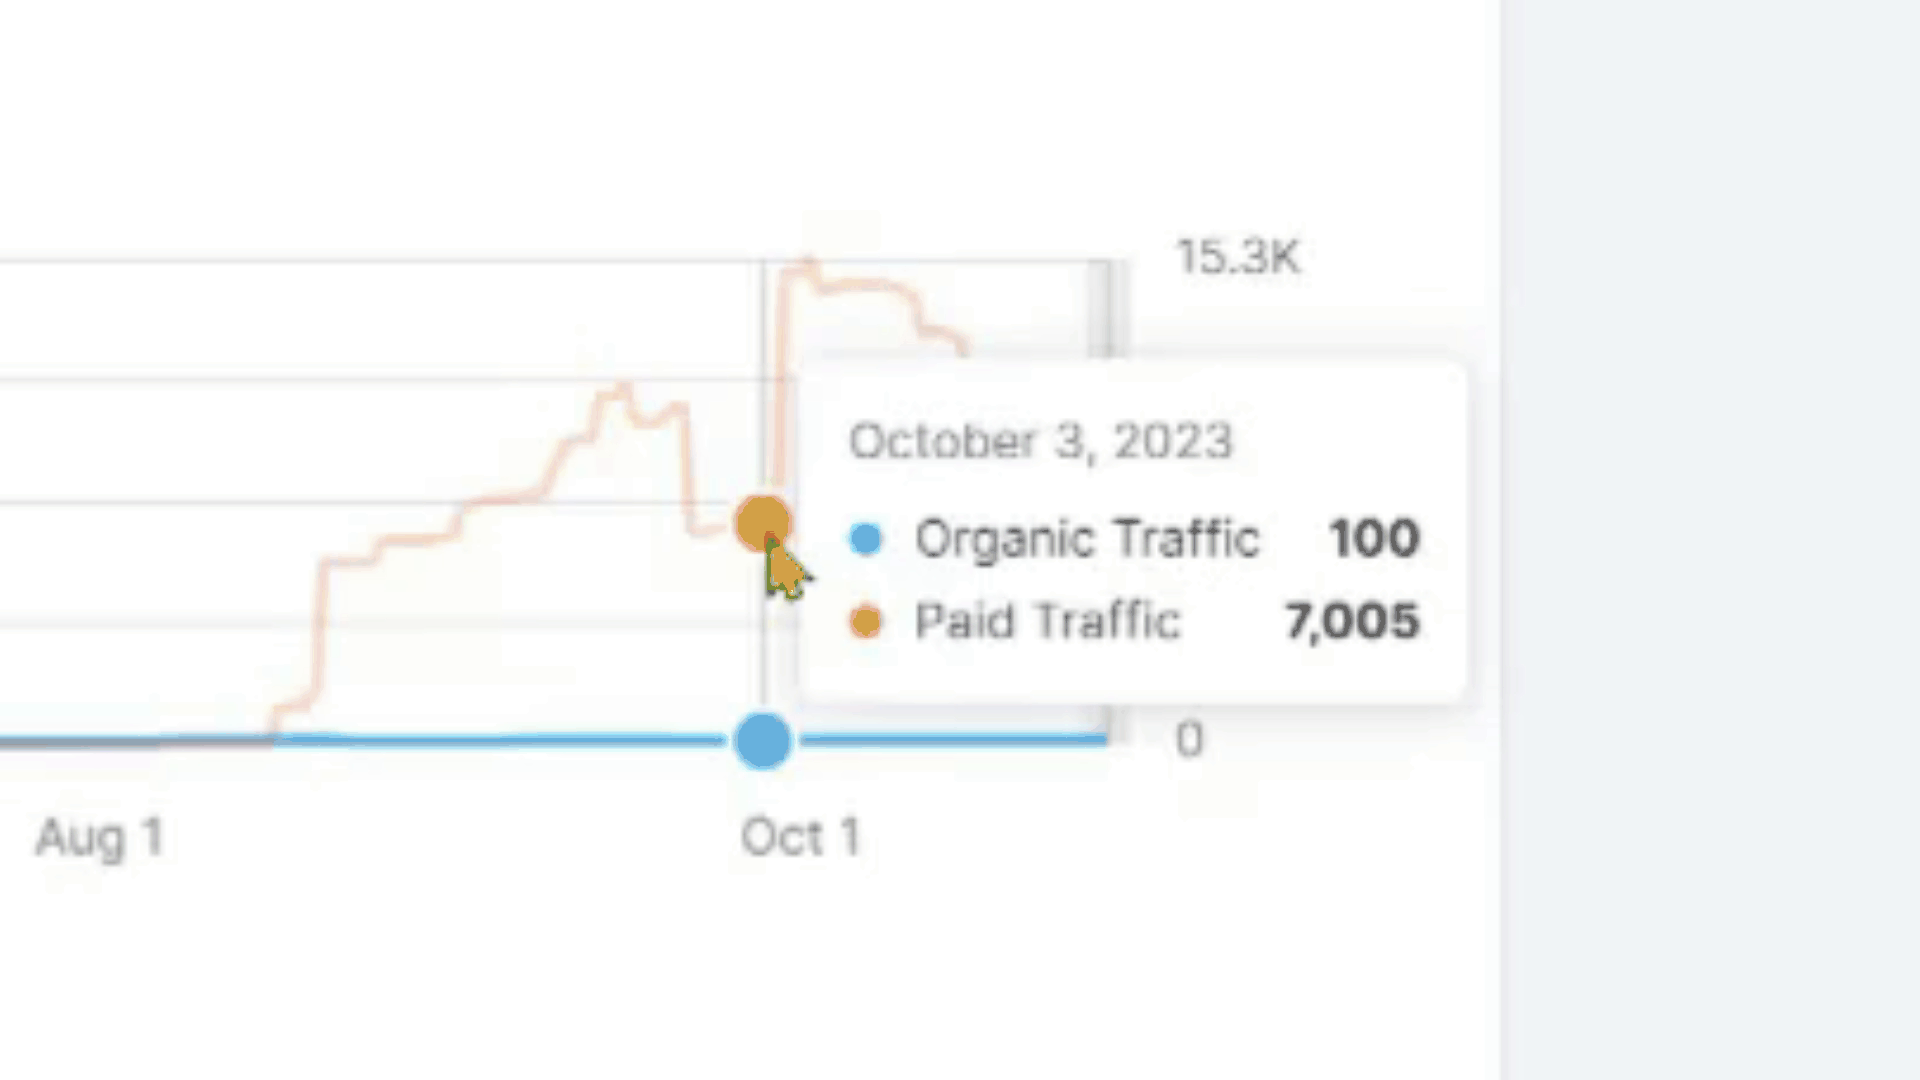 Does Google Ads affect Google organic traffic